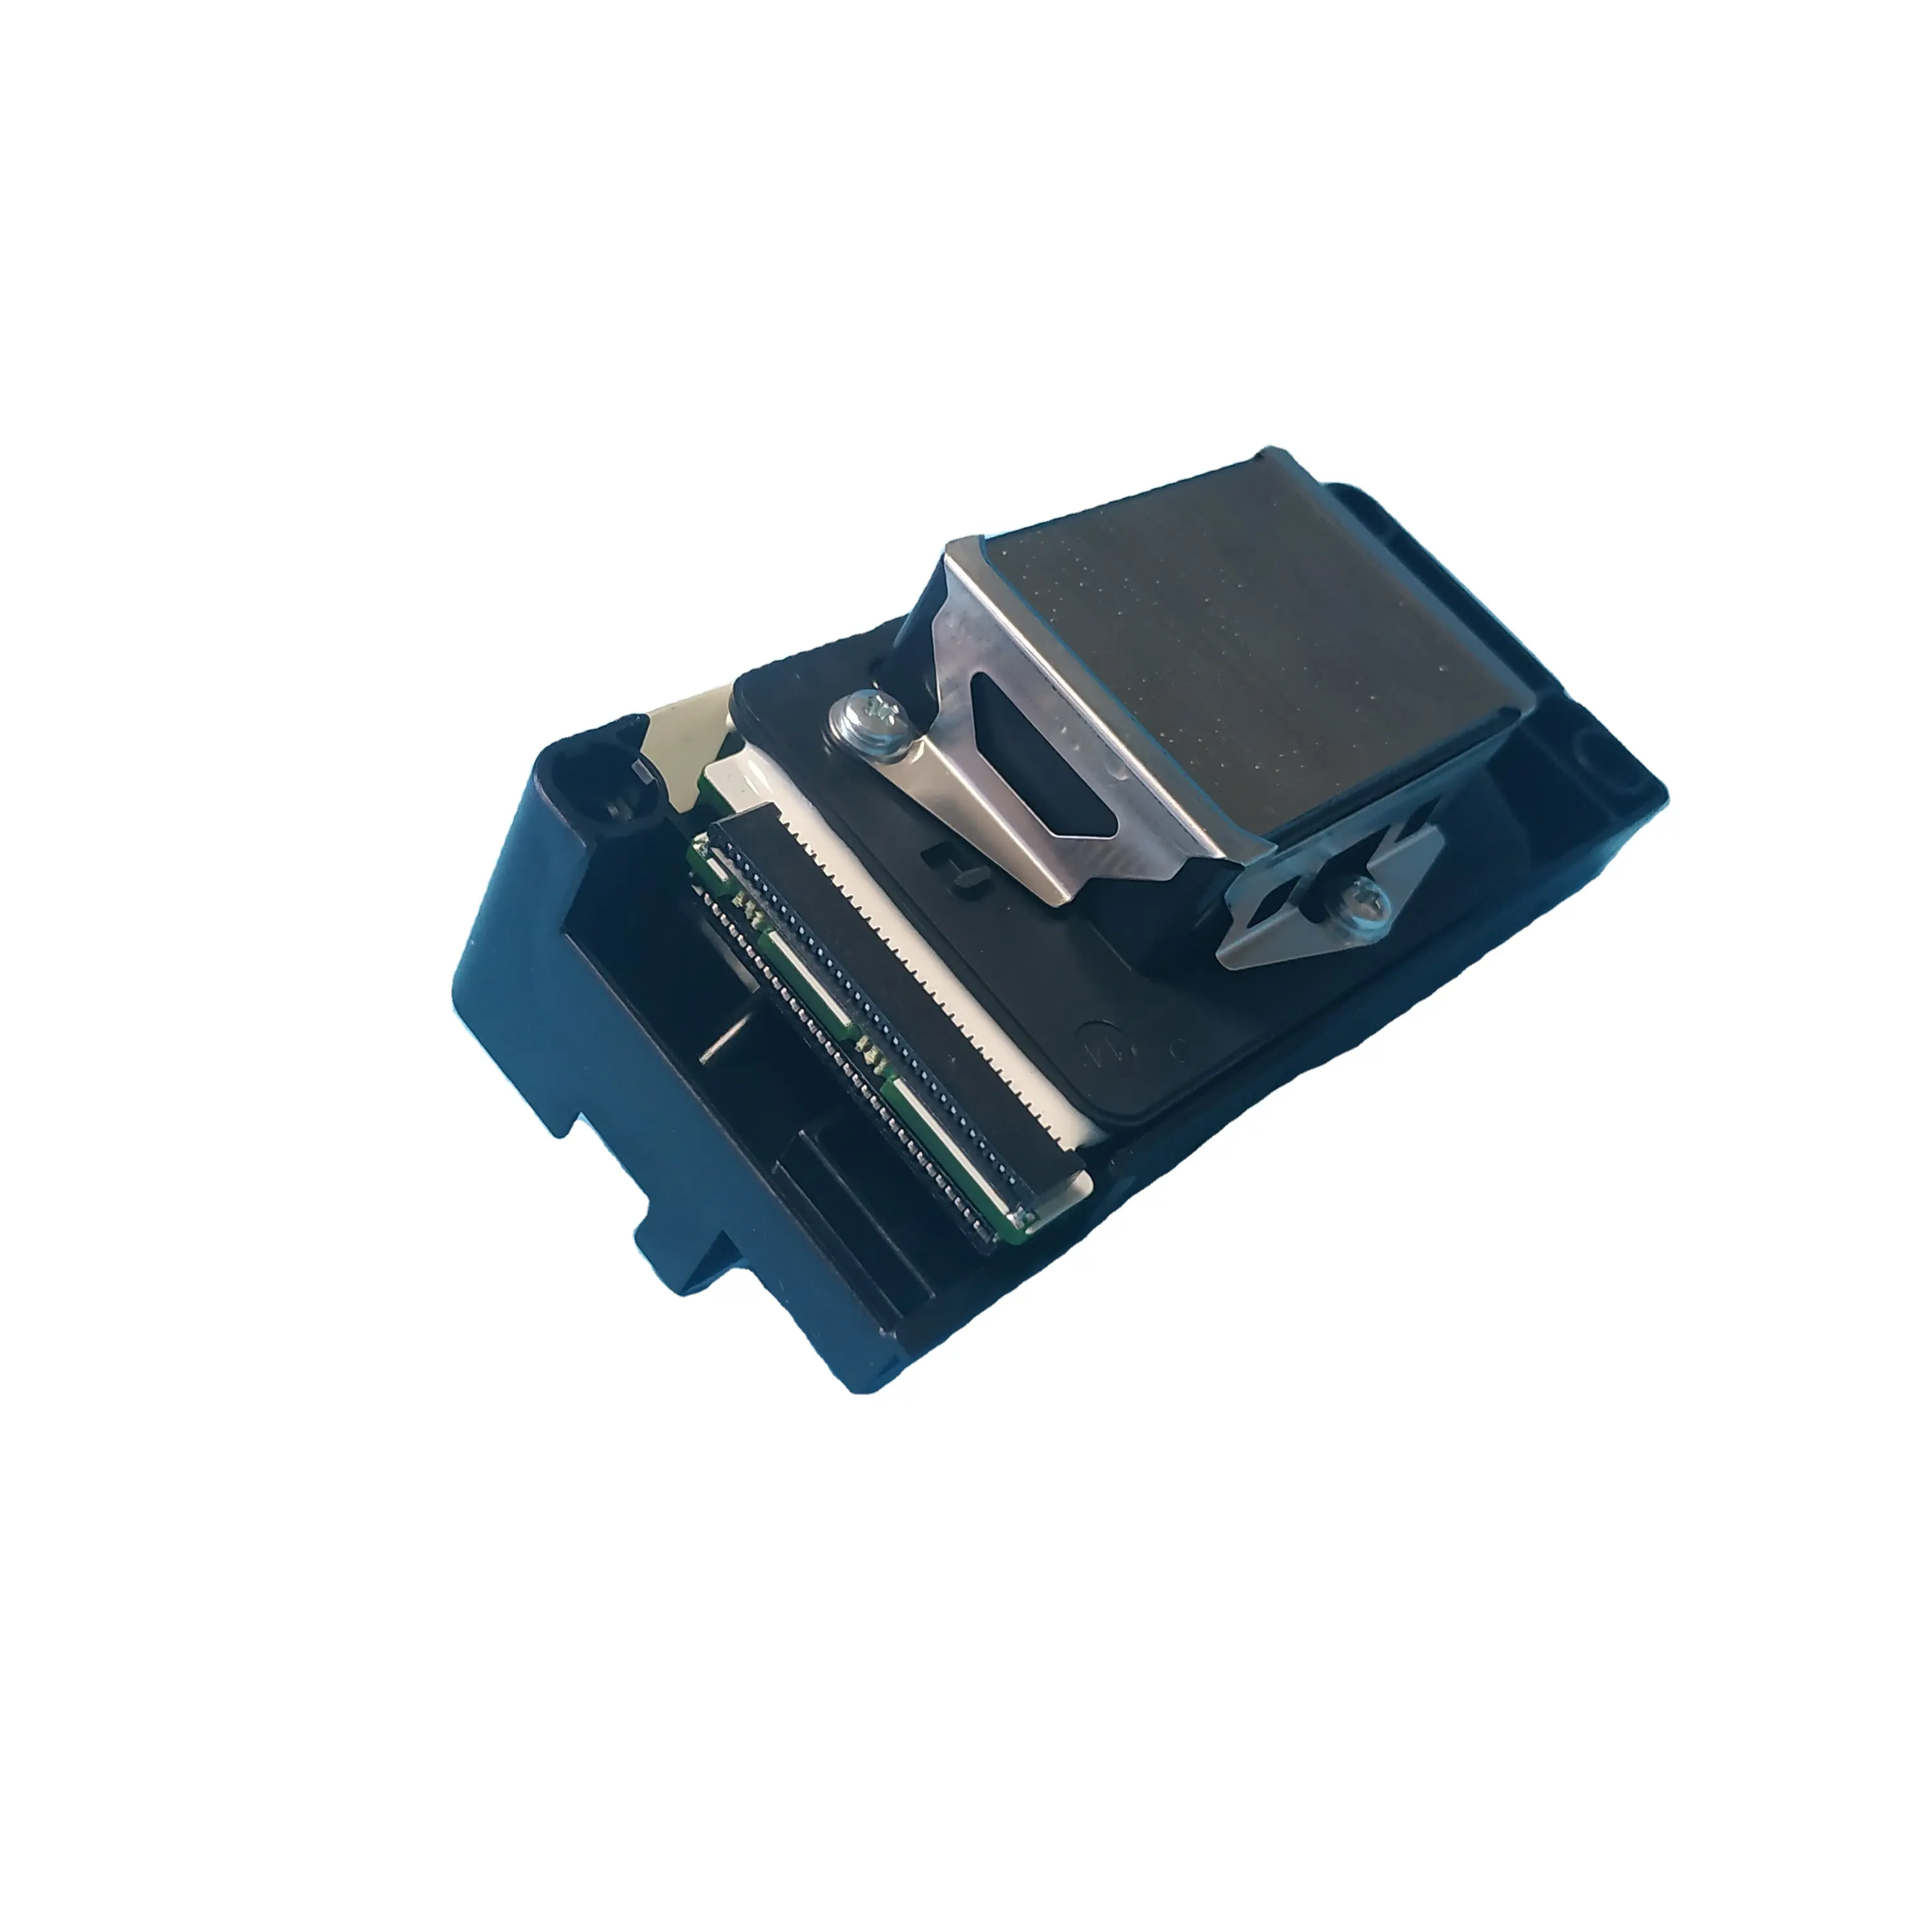 DX5 Printer Head for Epson Stylus Pro 7800 9800Printer/ F160010 Waterbased PrintHead